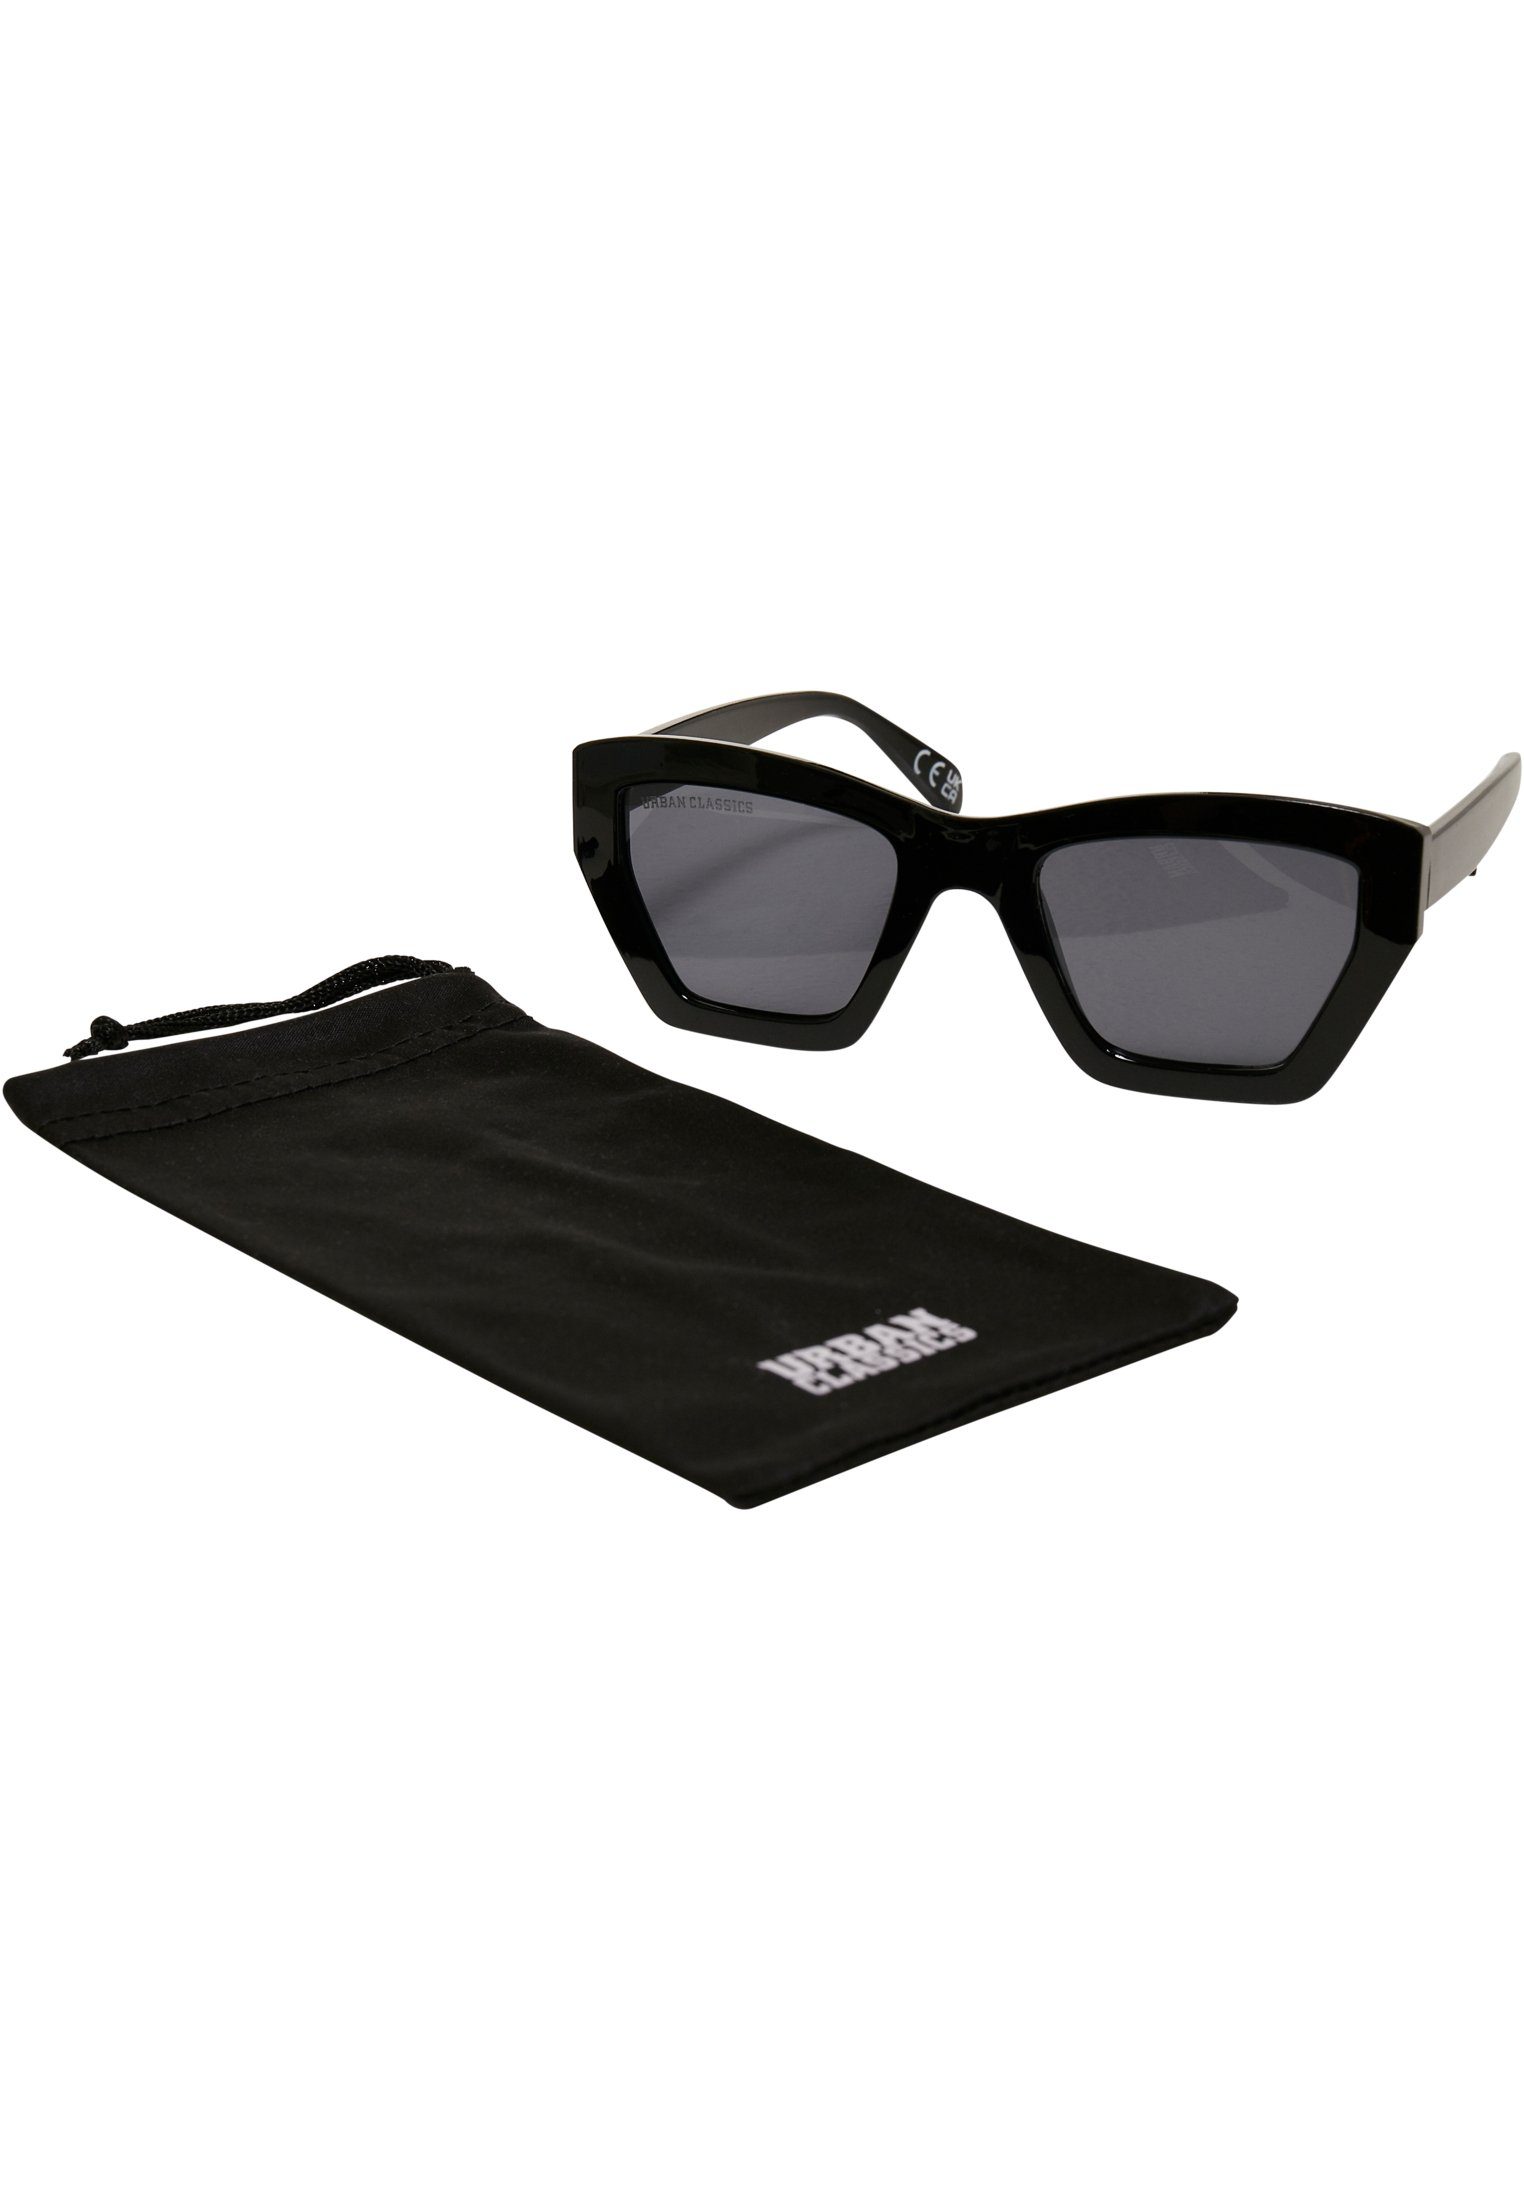 Unisex Grande black Sunglasses URBAN CLASSICS Rio Sonnenbrille